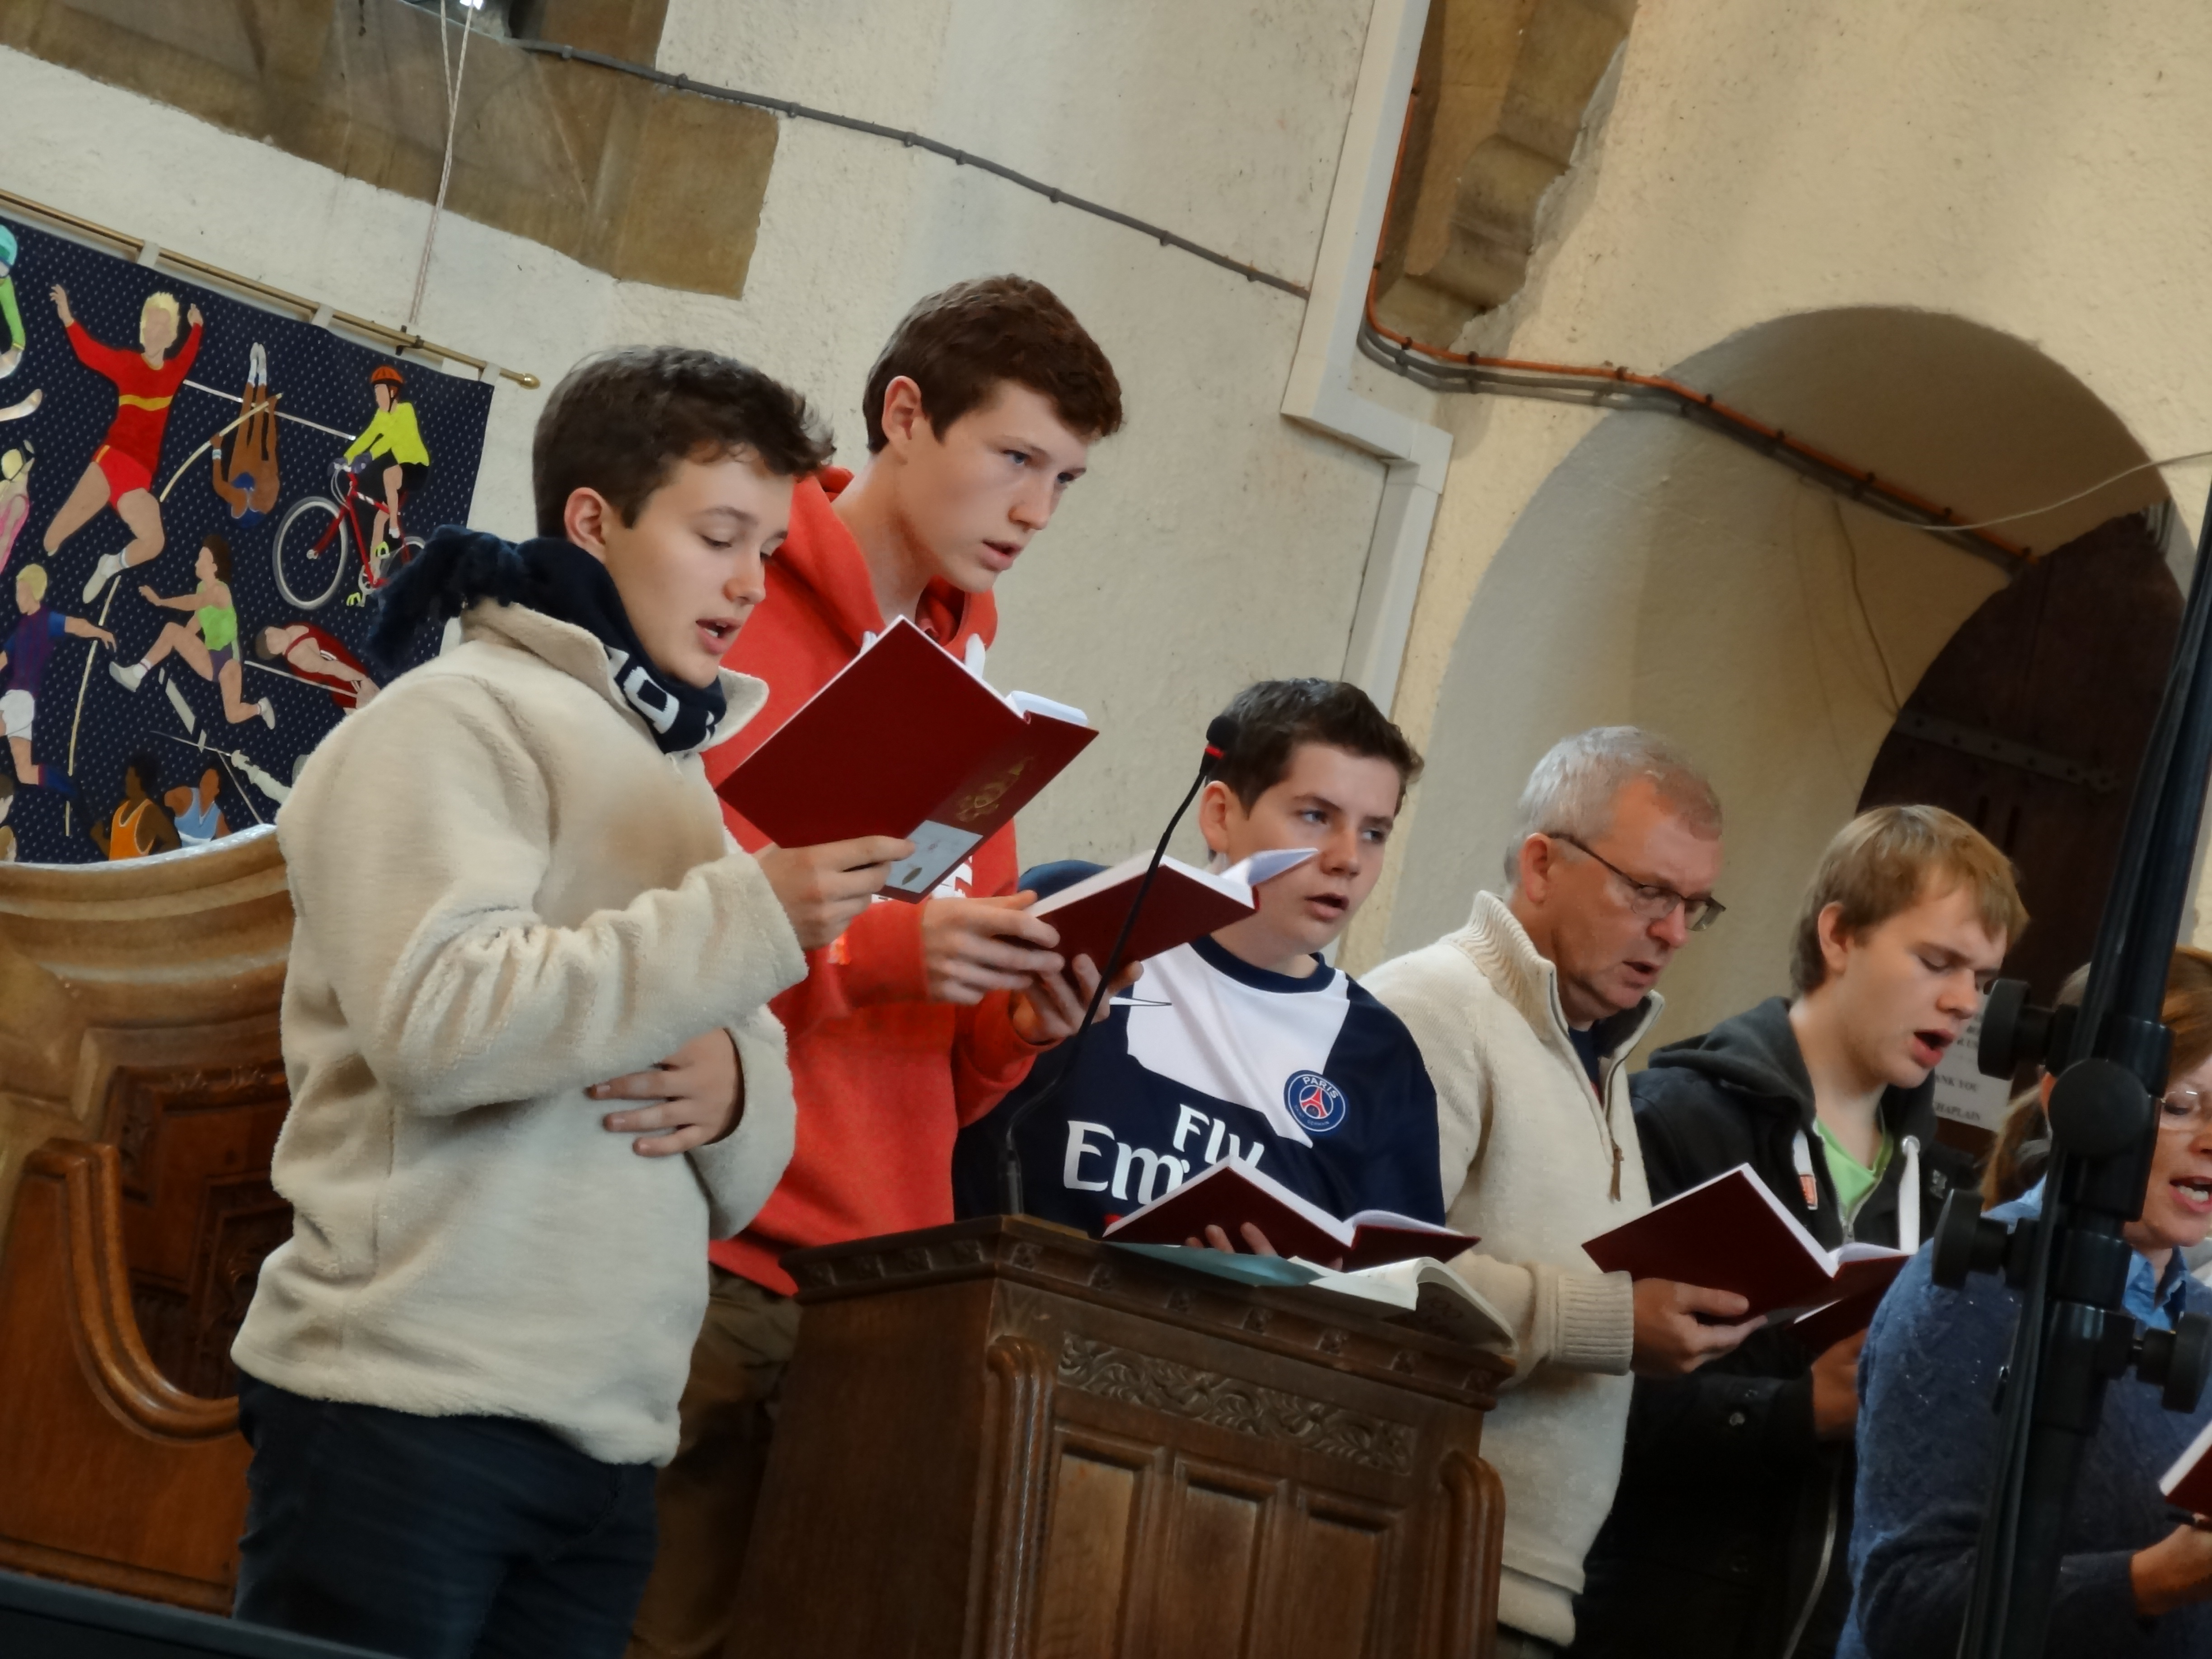 The Senior Choirs recording on Saturday